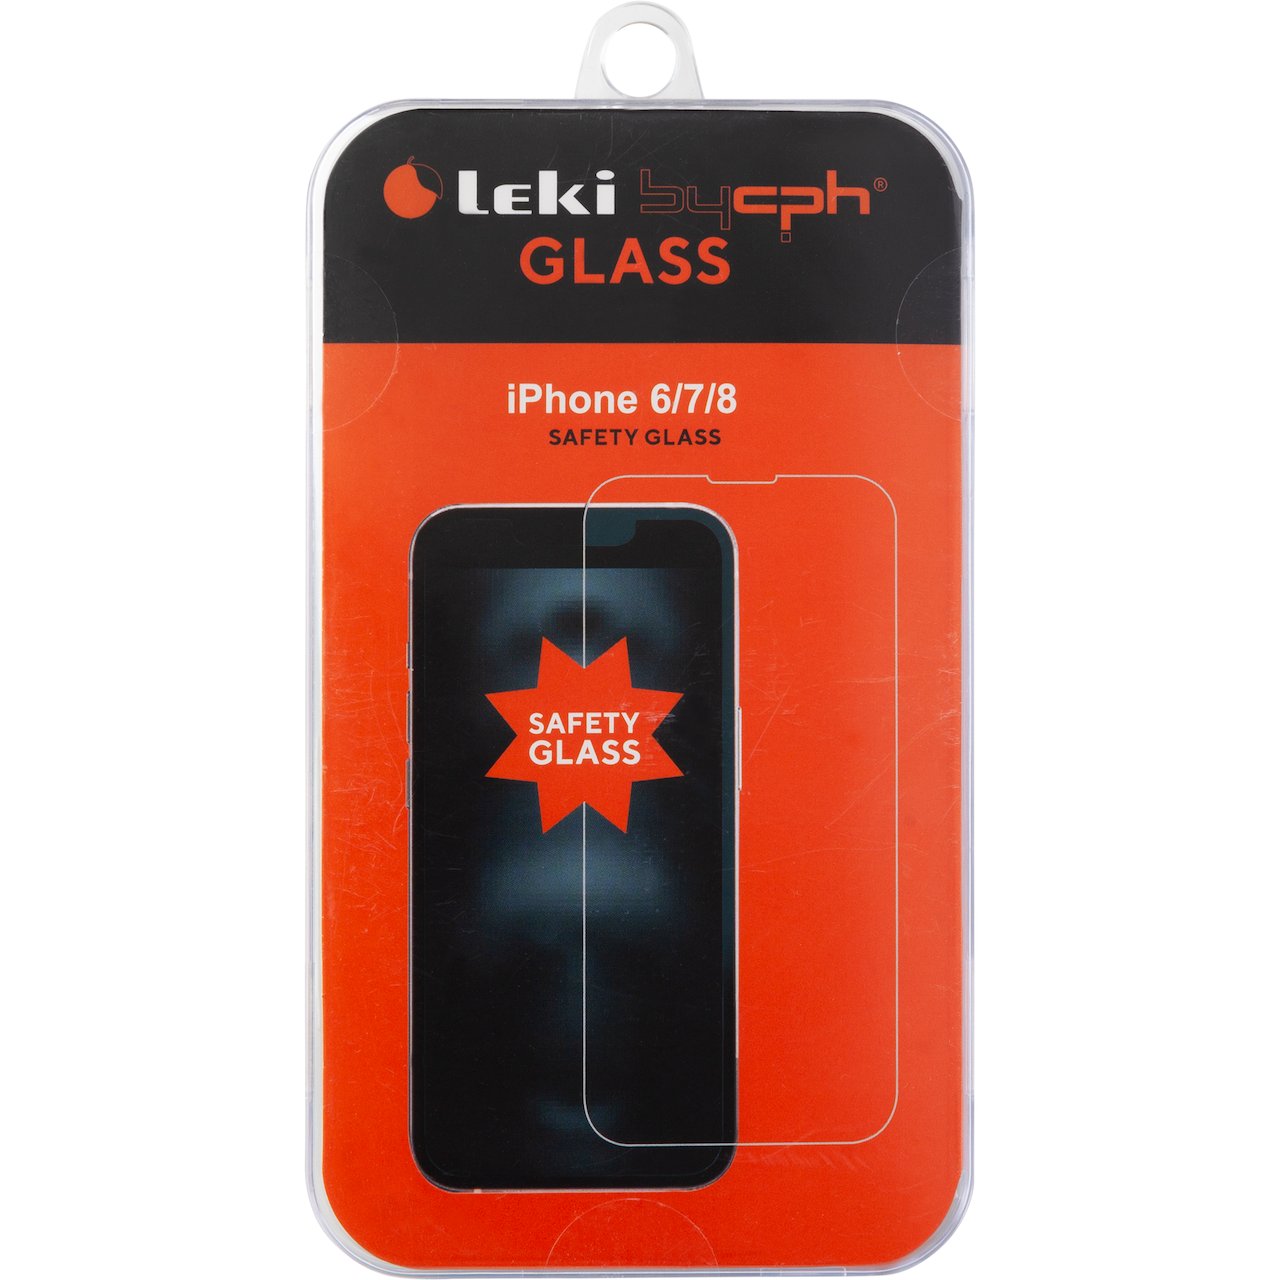 LEKI BYCPH GLASS TIL IPHONE 6/7/8